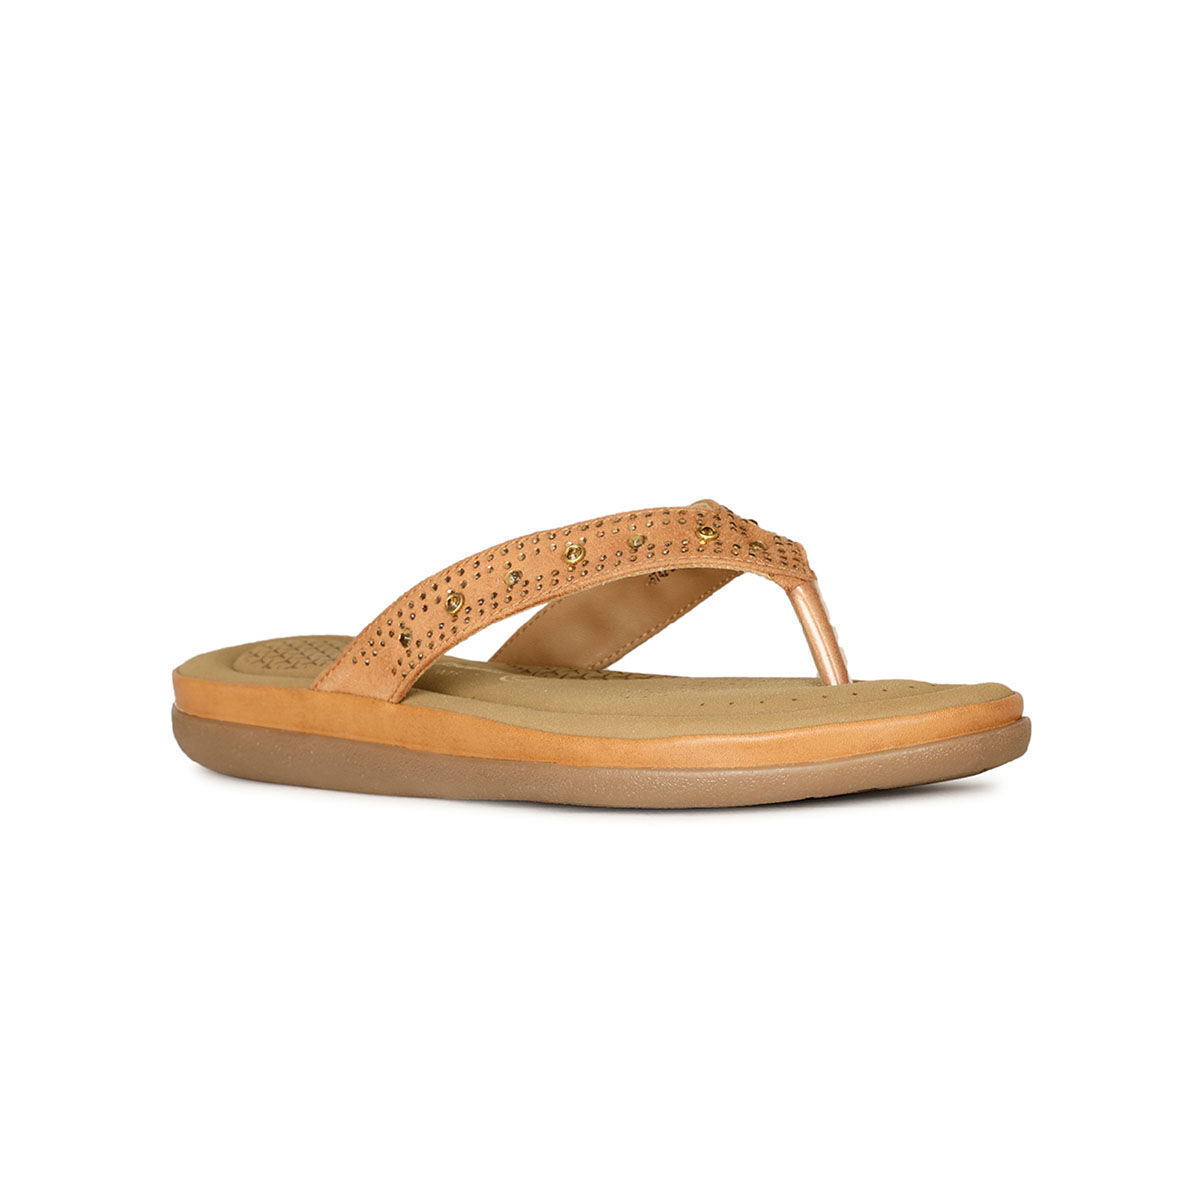 Buy Bata Women Casual Platform Sandals- Grey Online